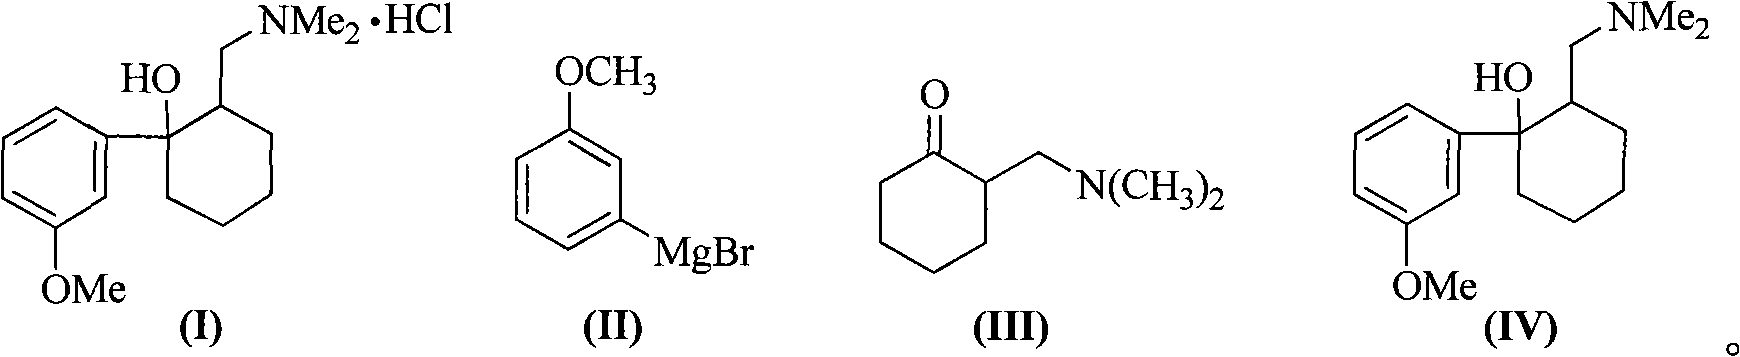 Method for synthesizing tramadol hydrochloride